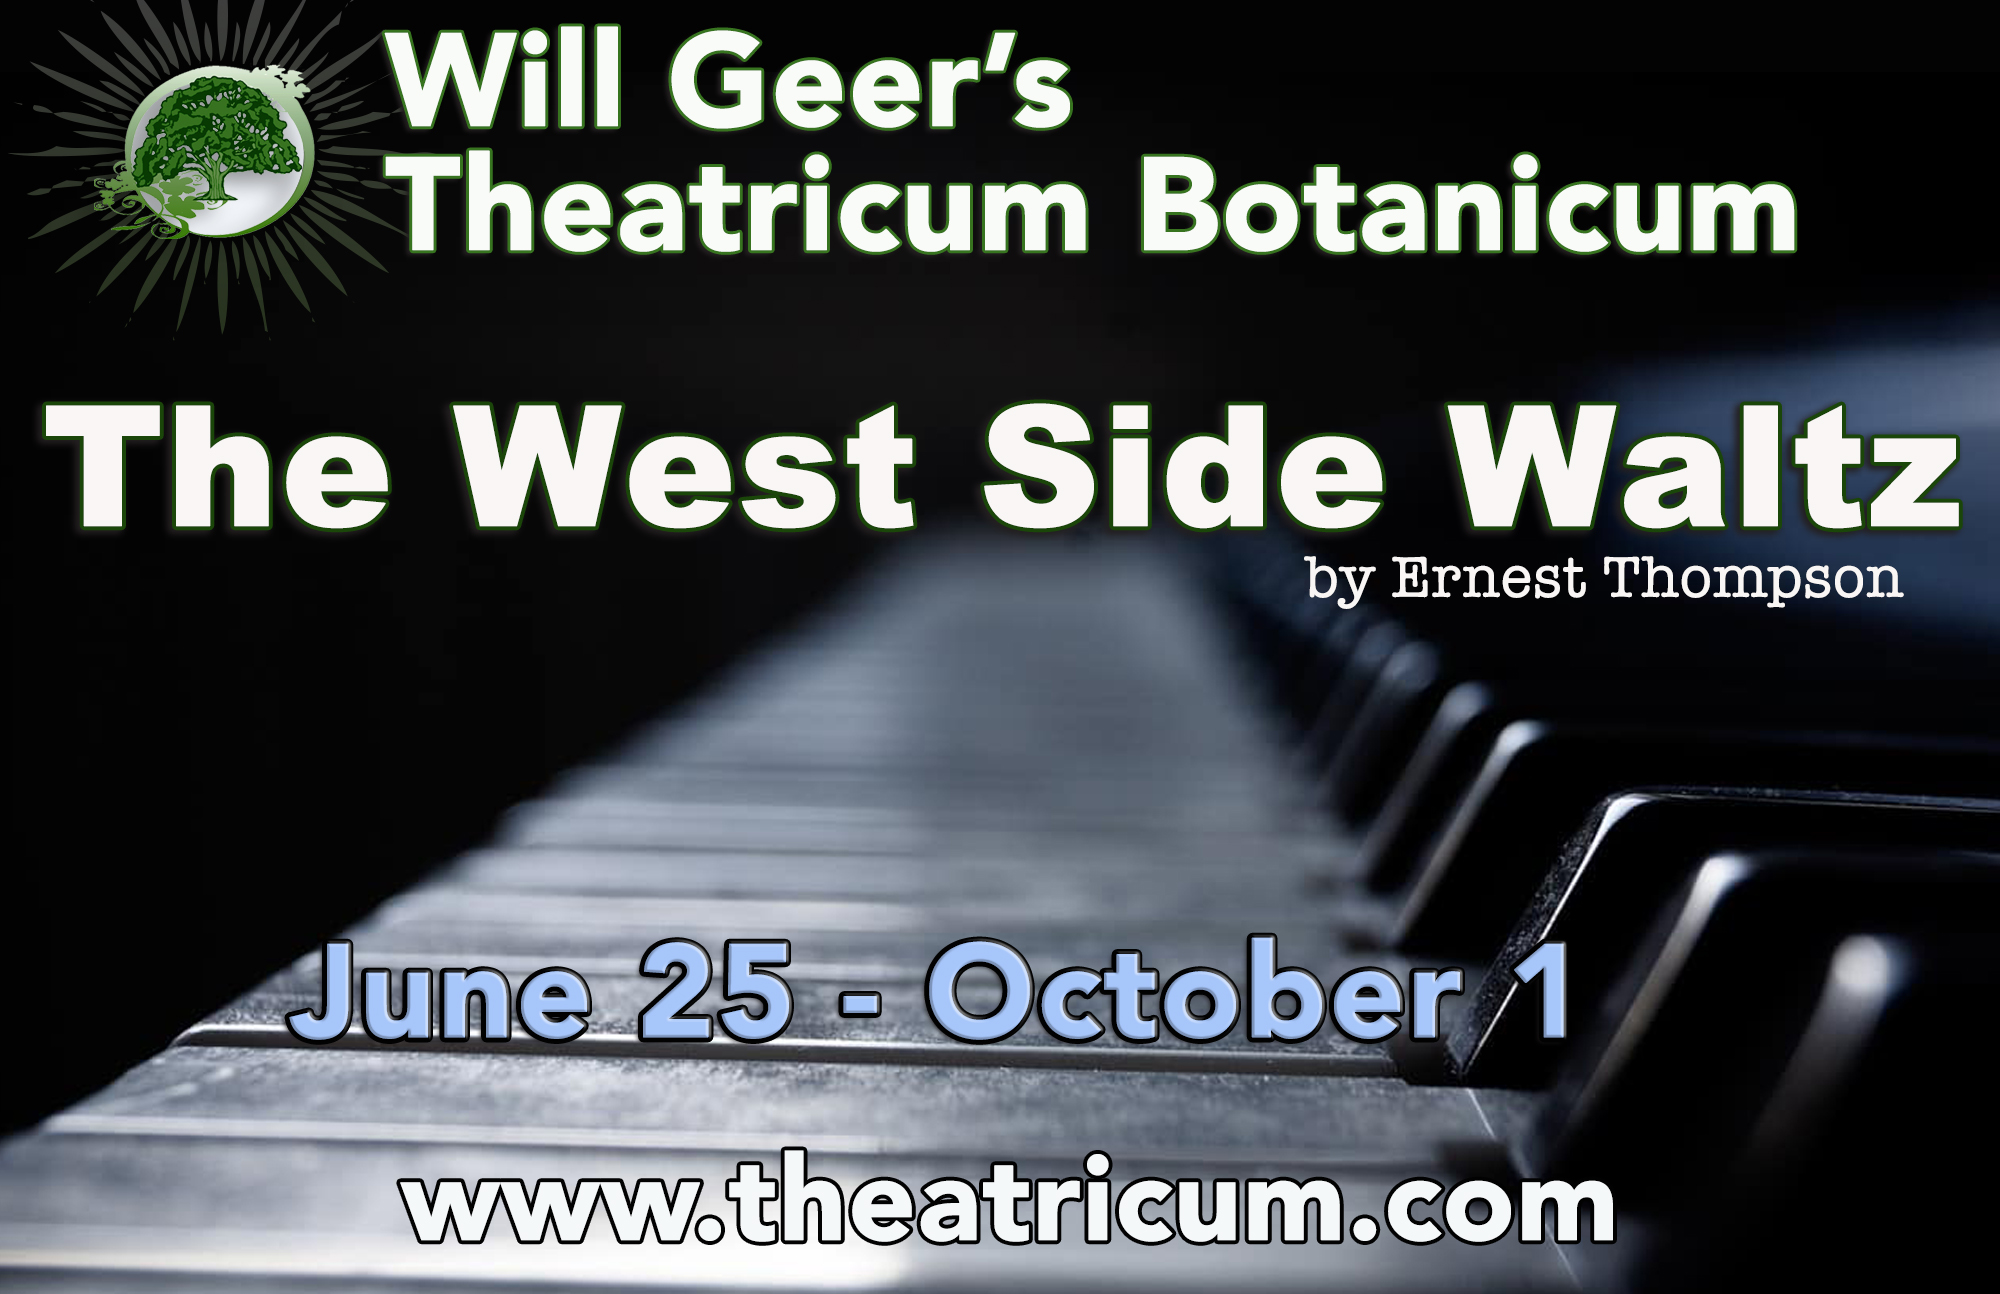 "The West Side Waltz"